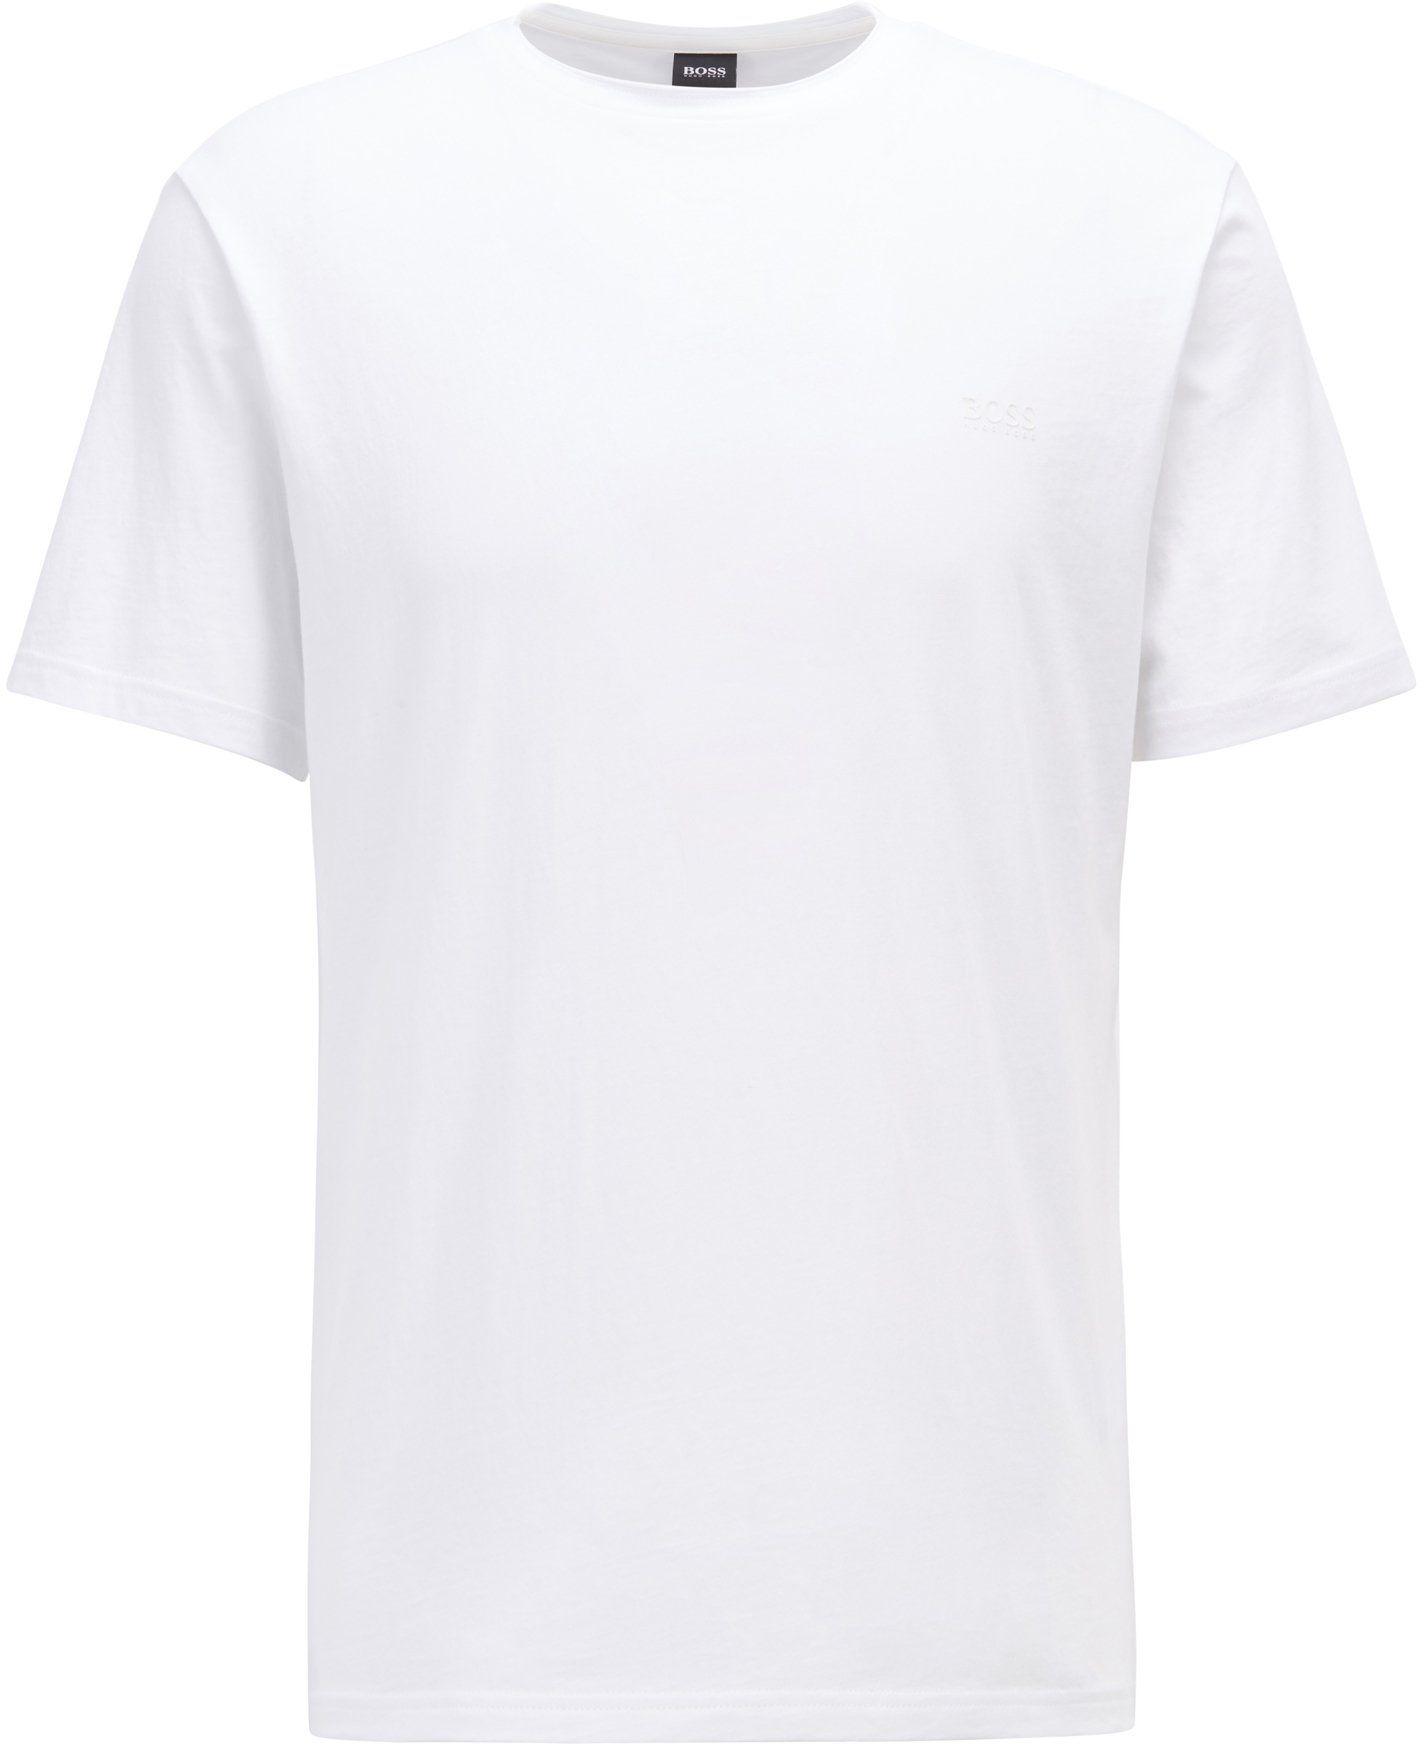 Hugo Boss T Shirt Trust White size L